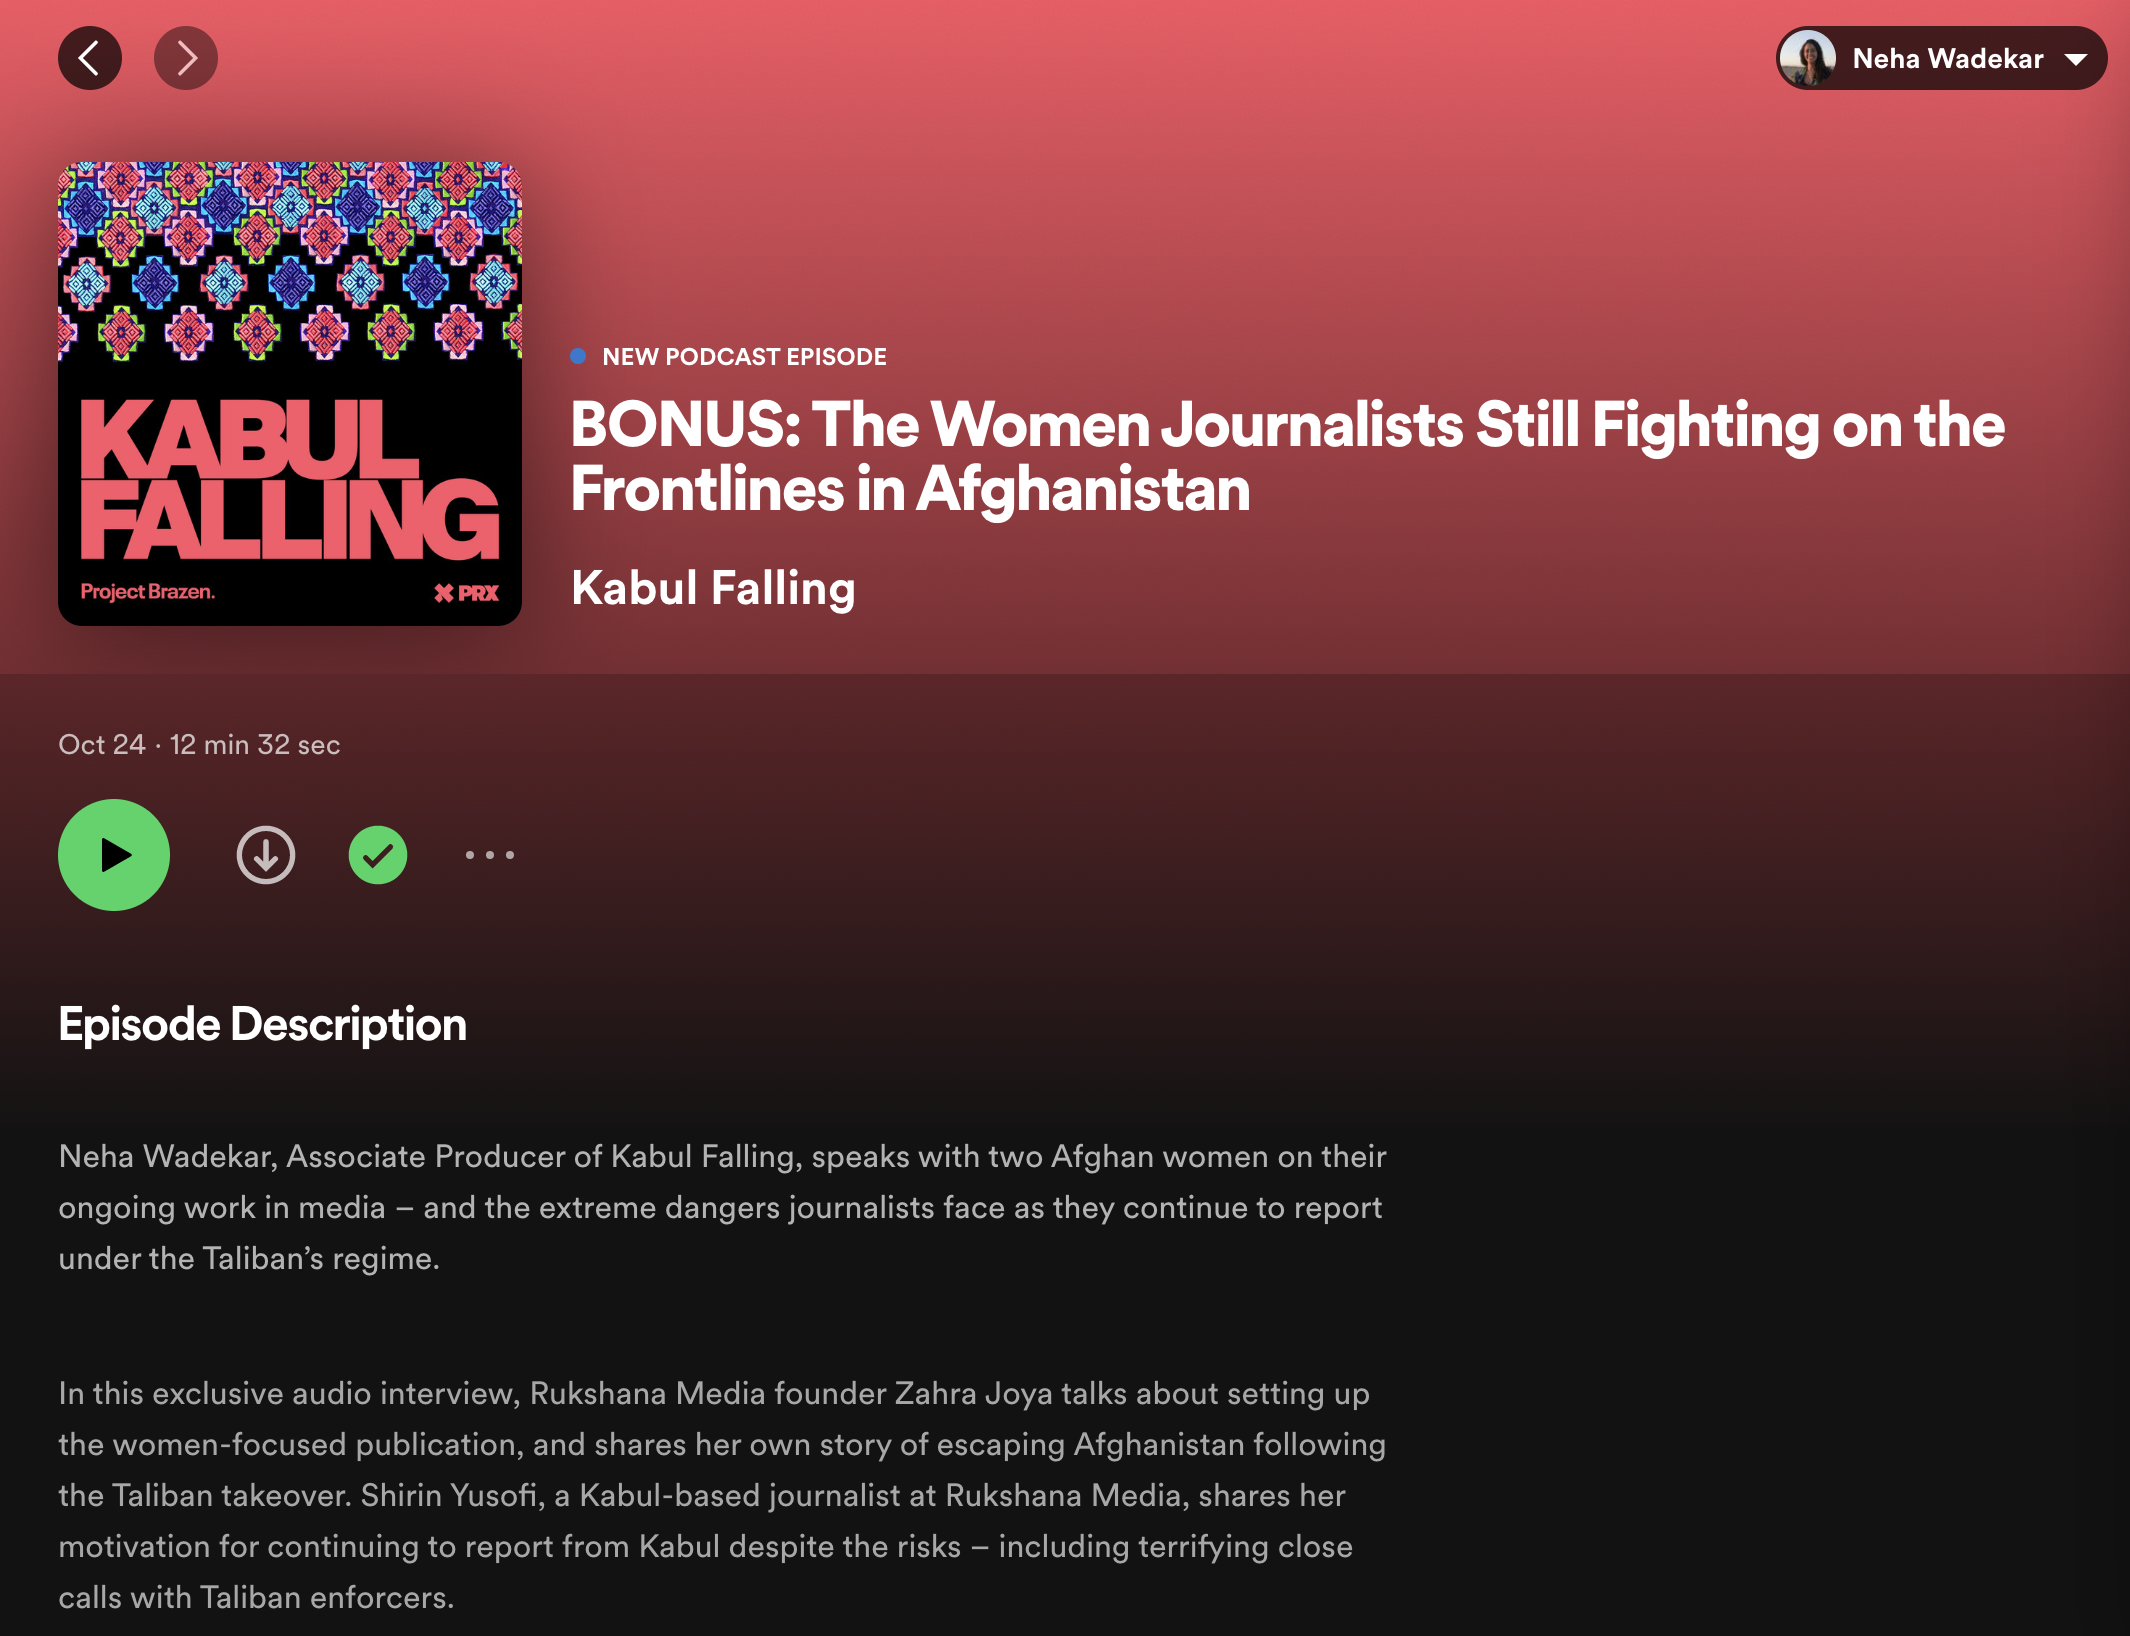 Kabul Falling: Bonus: The Women Journalists Still Fighting on the Frontlines in Afghanistan – Project Brazen (image)